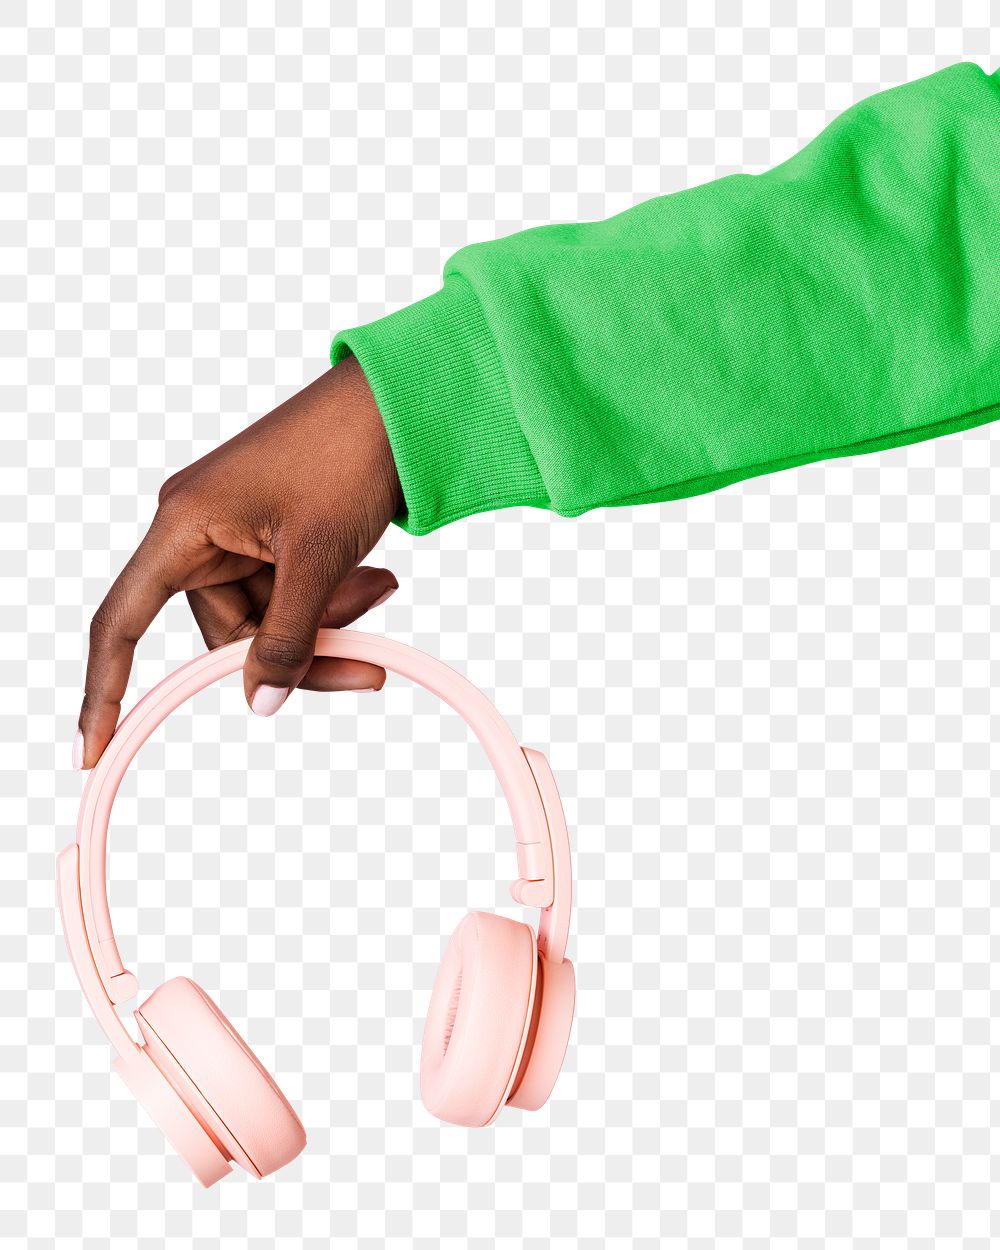 PNG hand holding pink headphones, entertainment sticker, transparent background